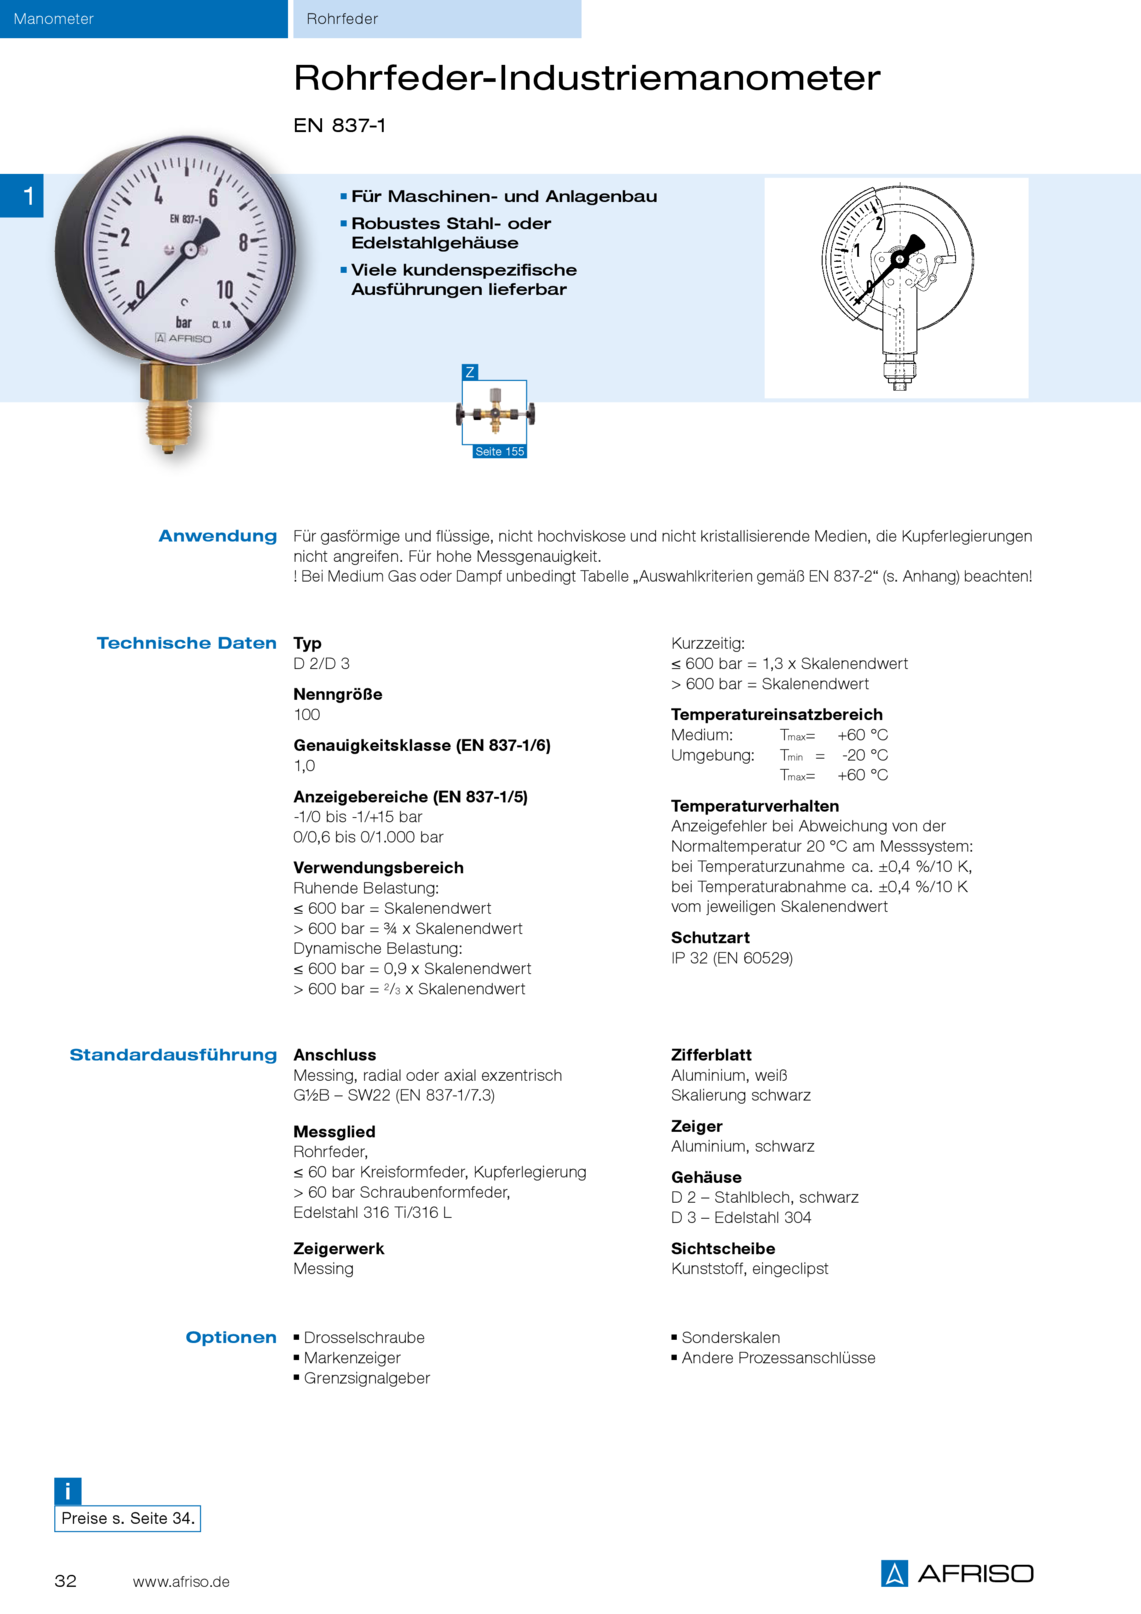 Afriso rohrfedere - industriemanometer类型D2